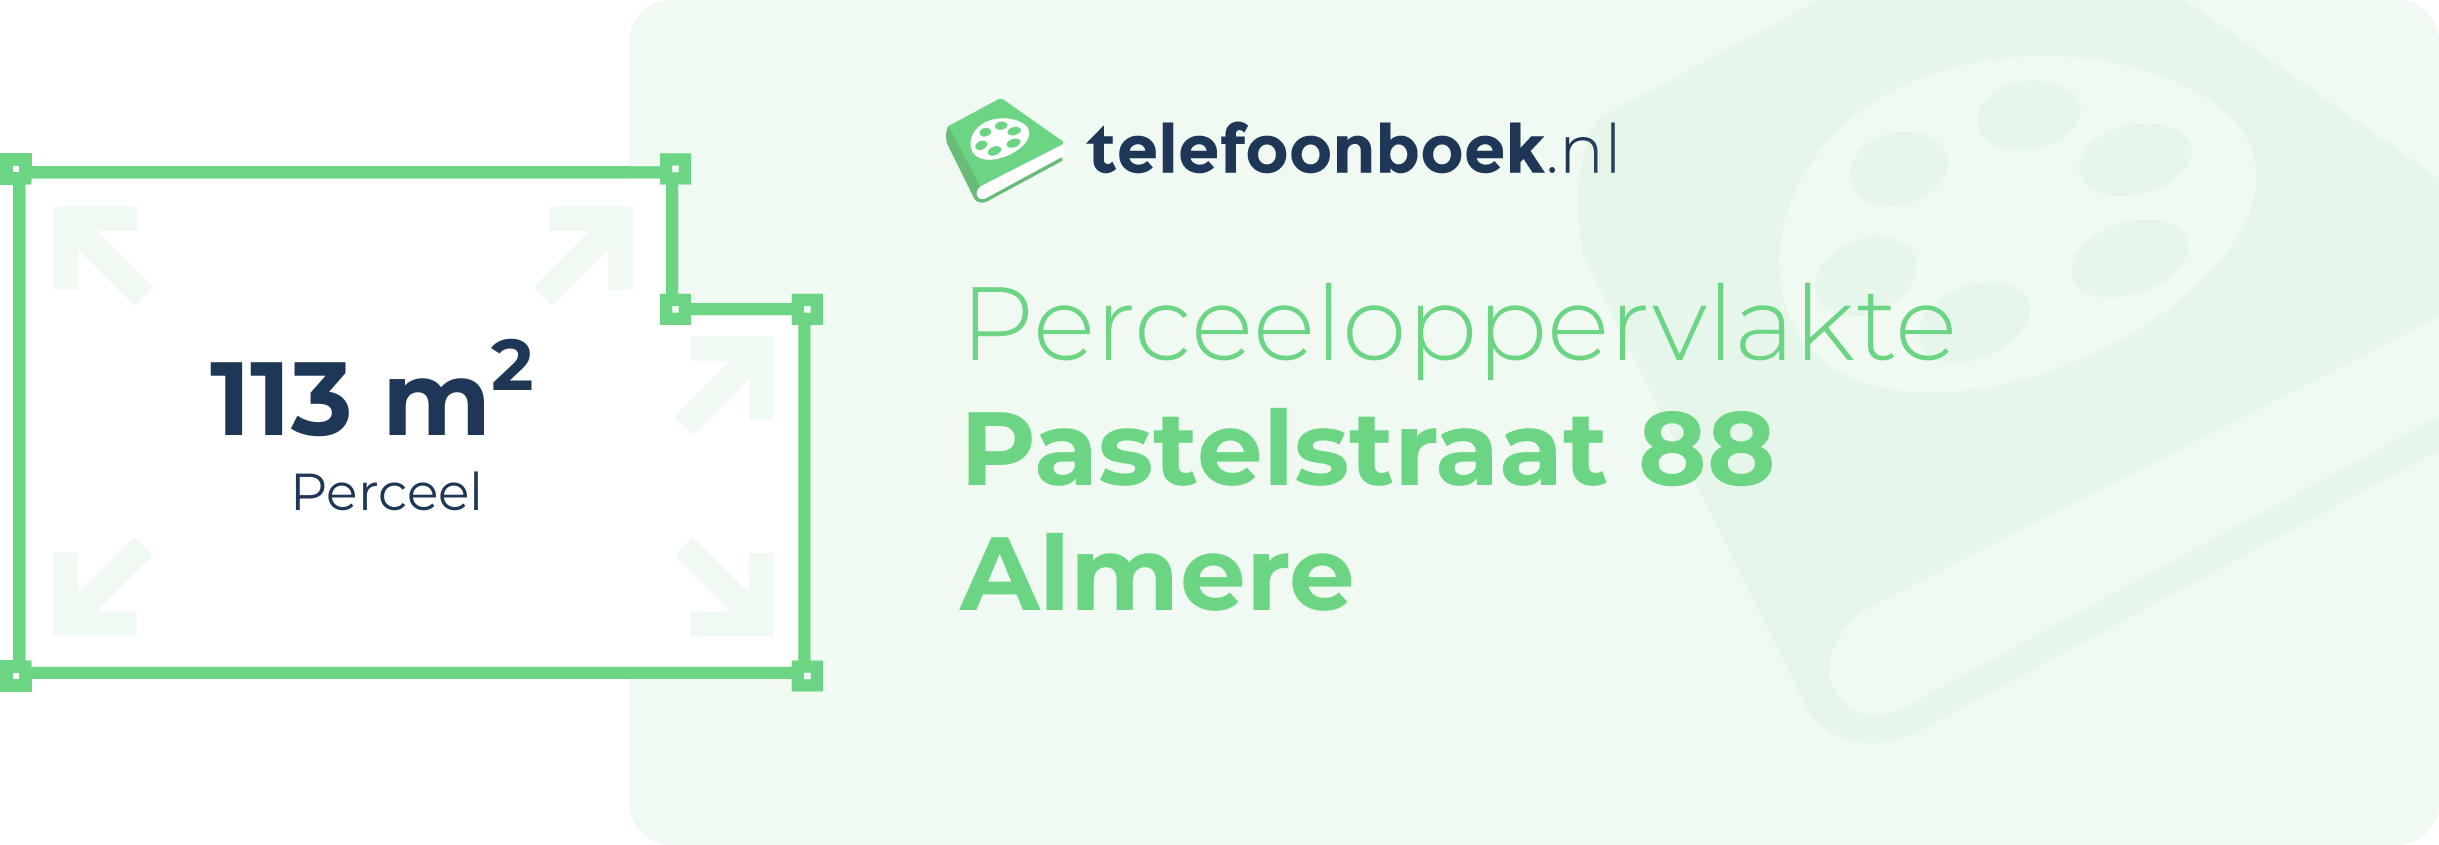 Perceeloppervlakte Pastelstraat 88 Almere